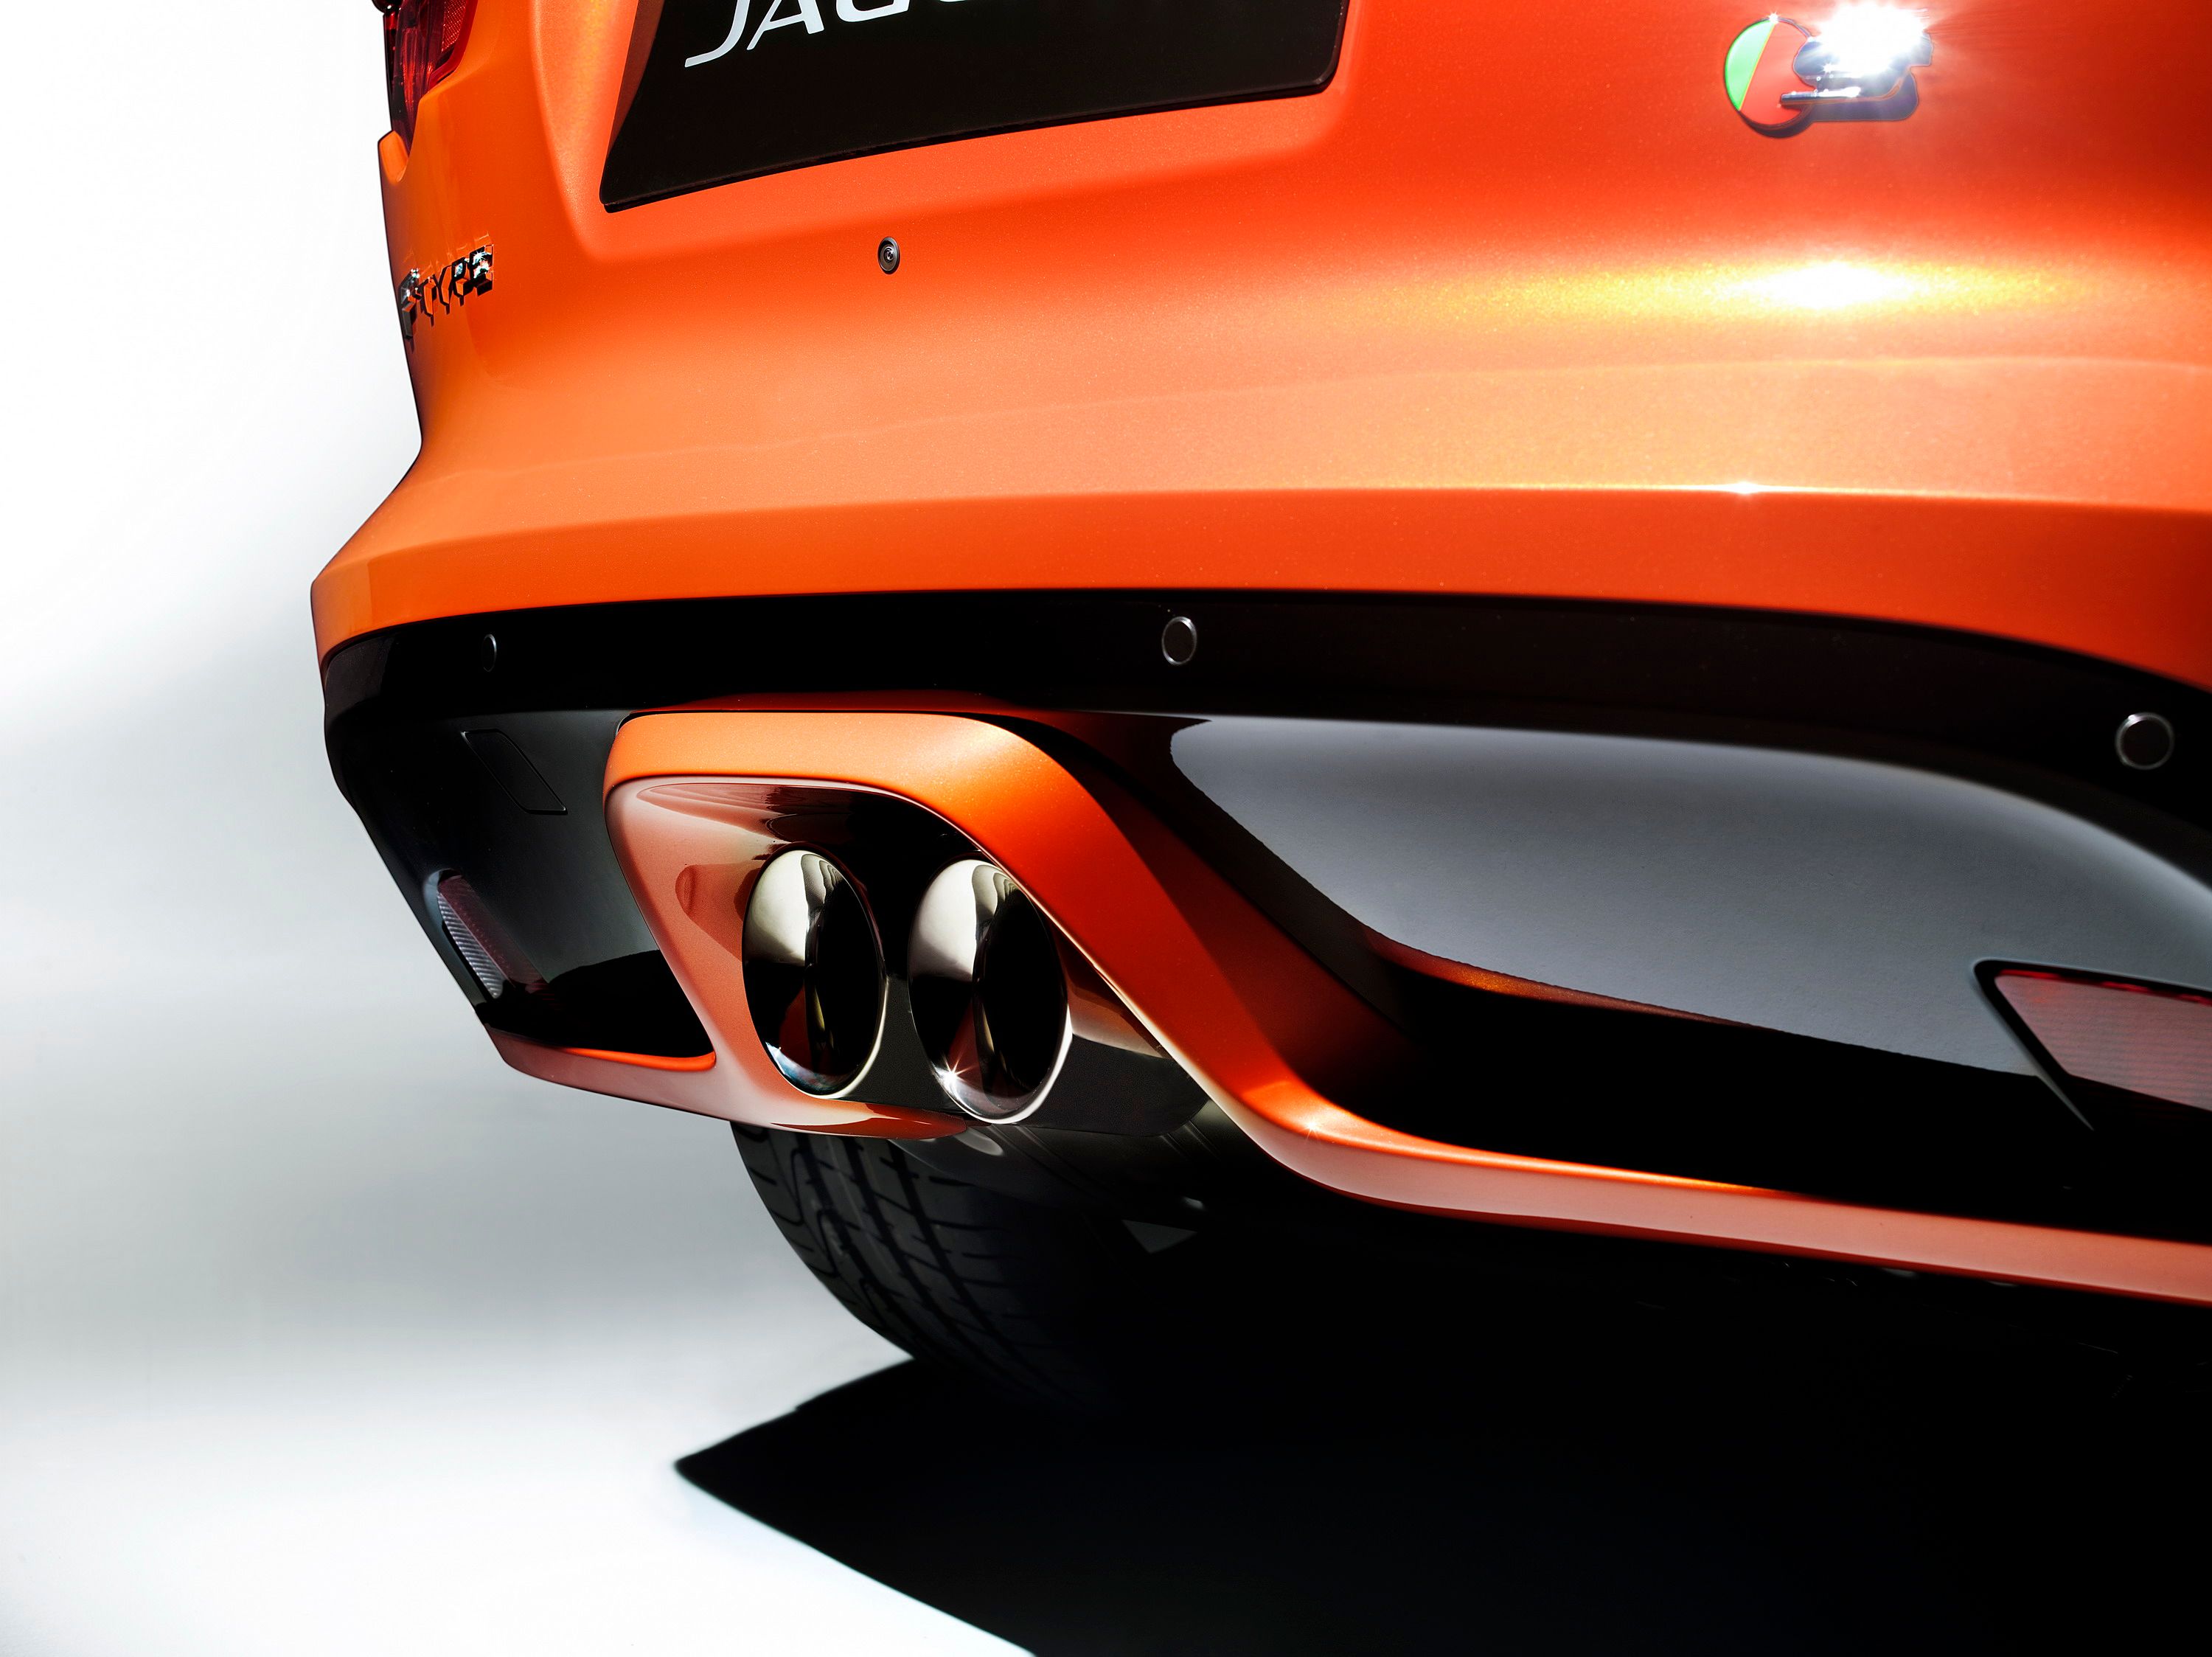 2013 Jaguar F-Type Firesand